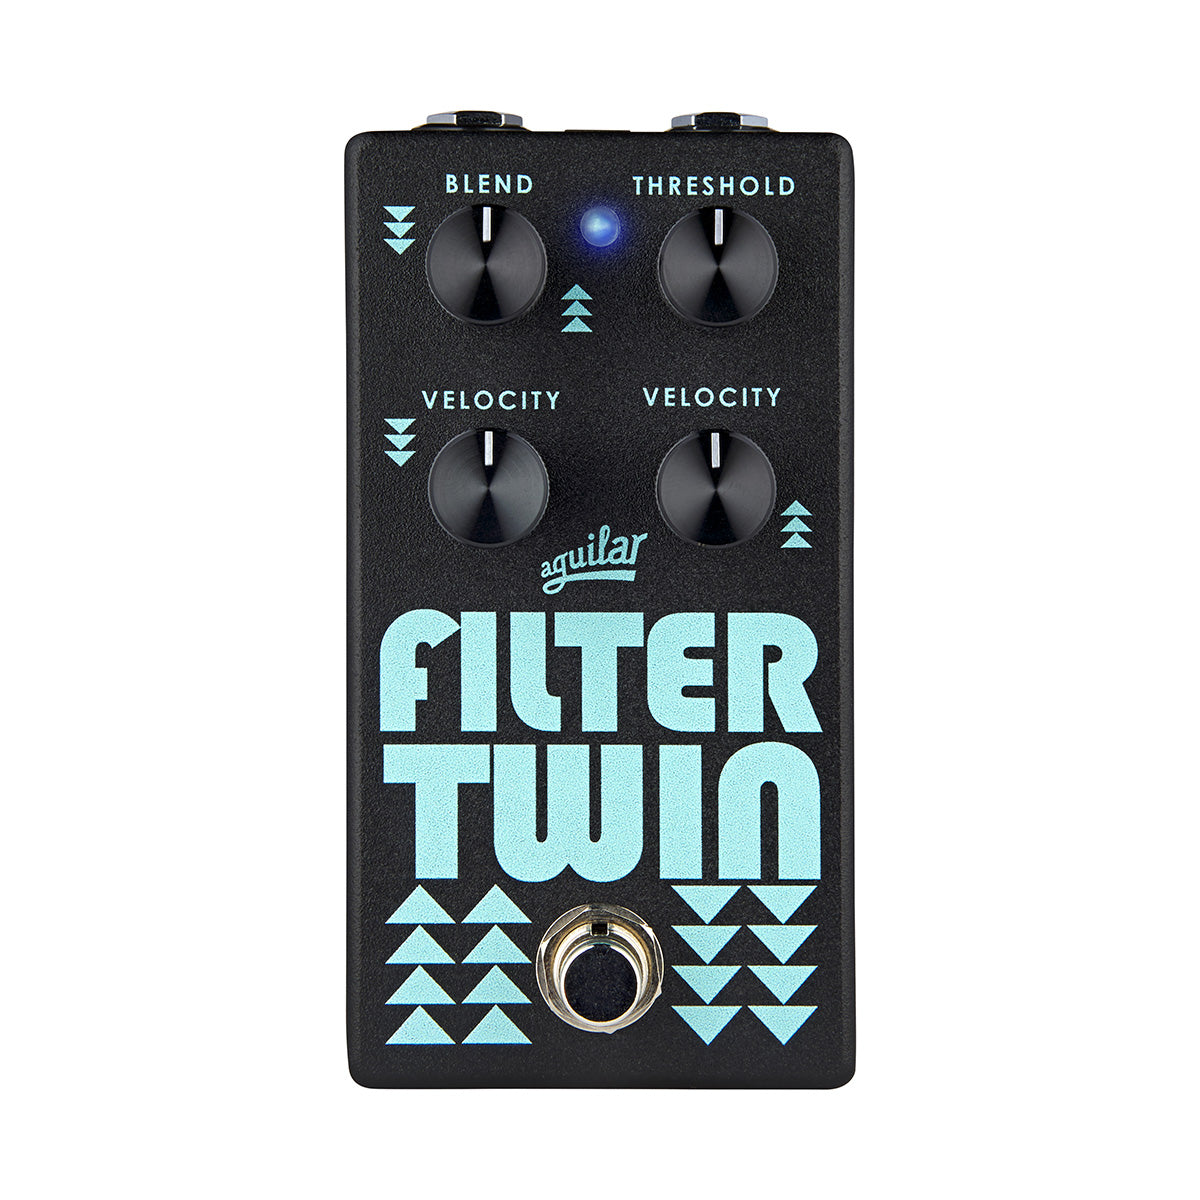 Filter Twin Dual Bass Envelope Filter Pedal